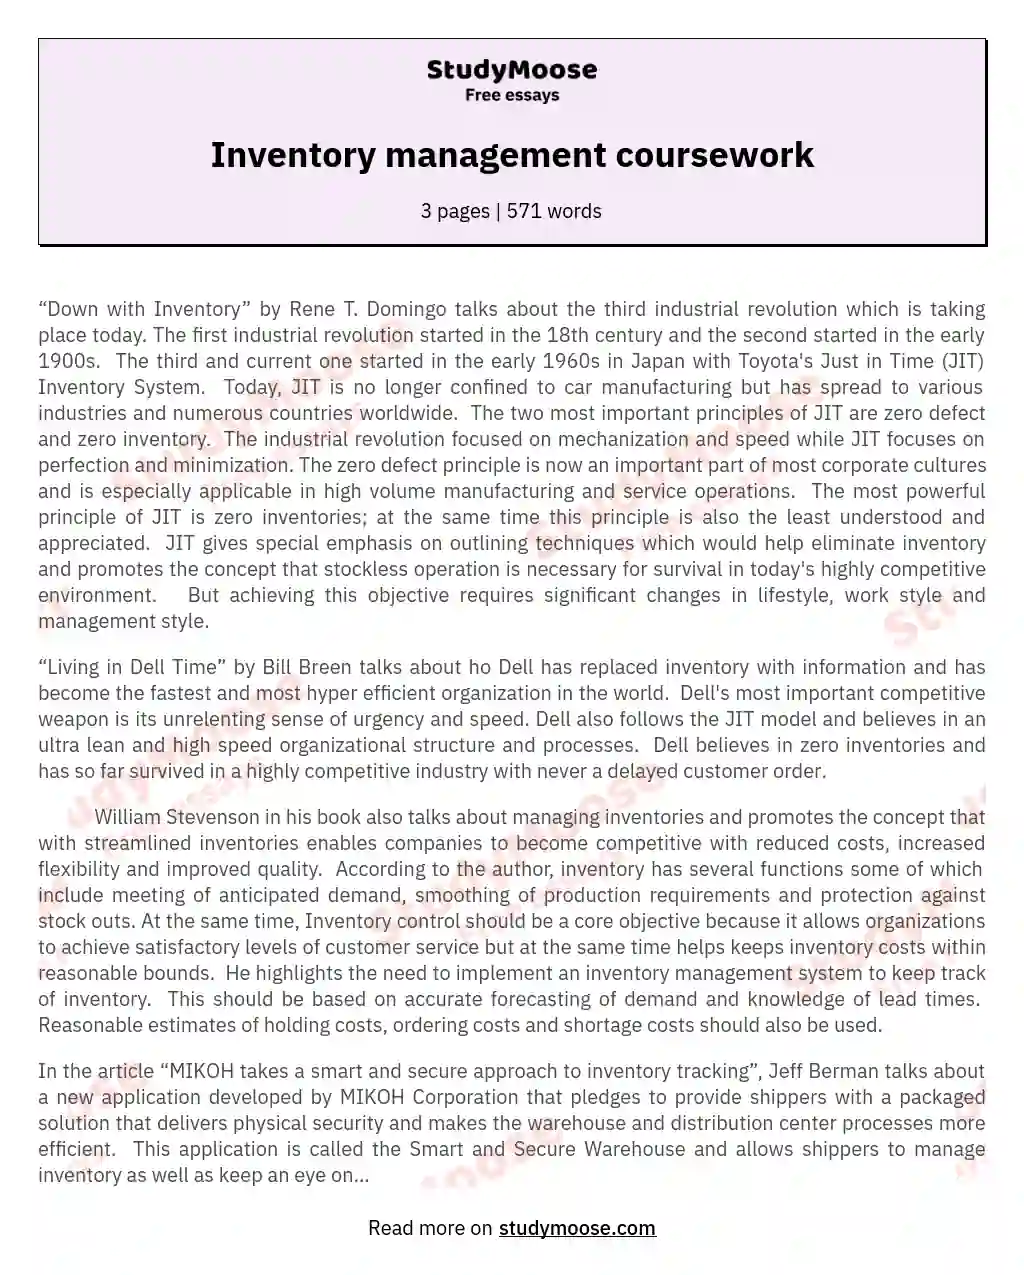 Inventory management coursework essay